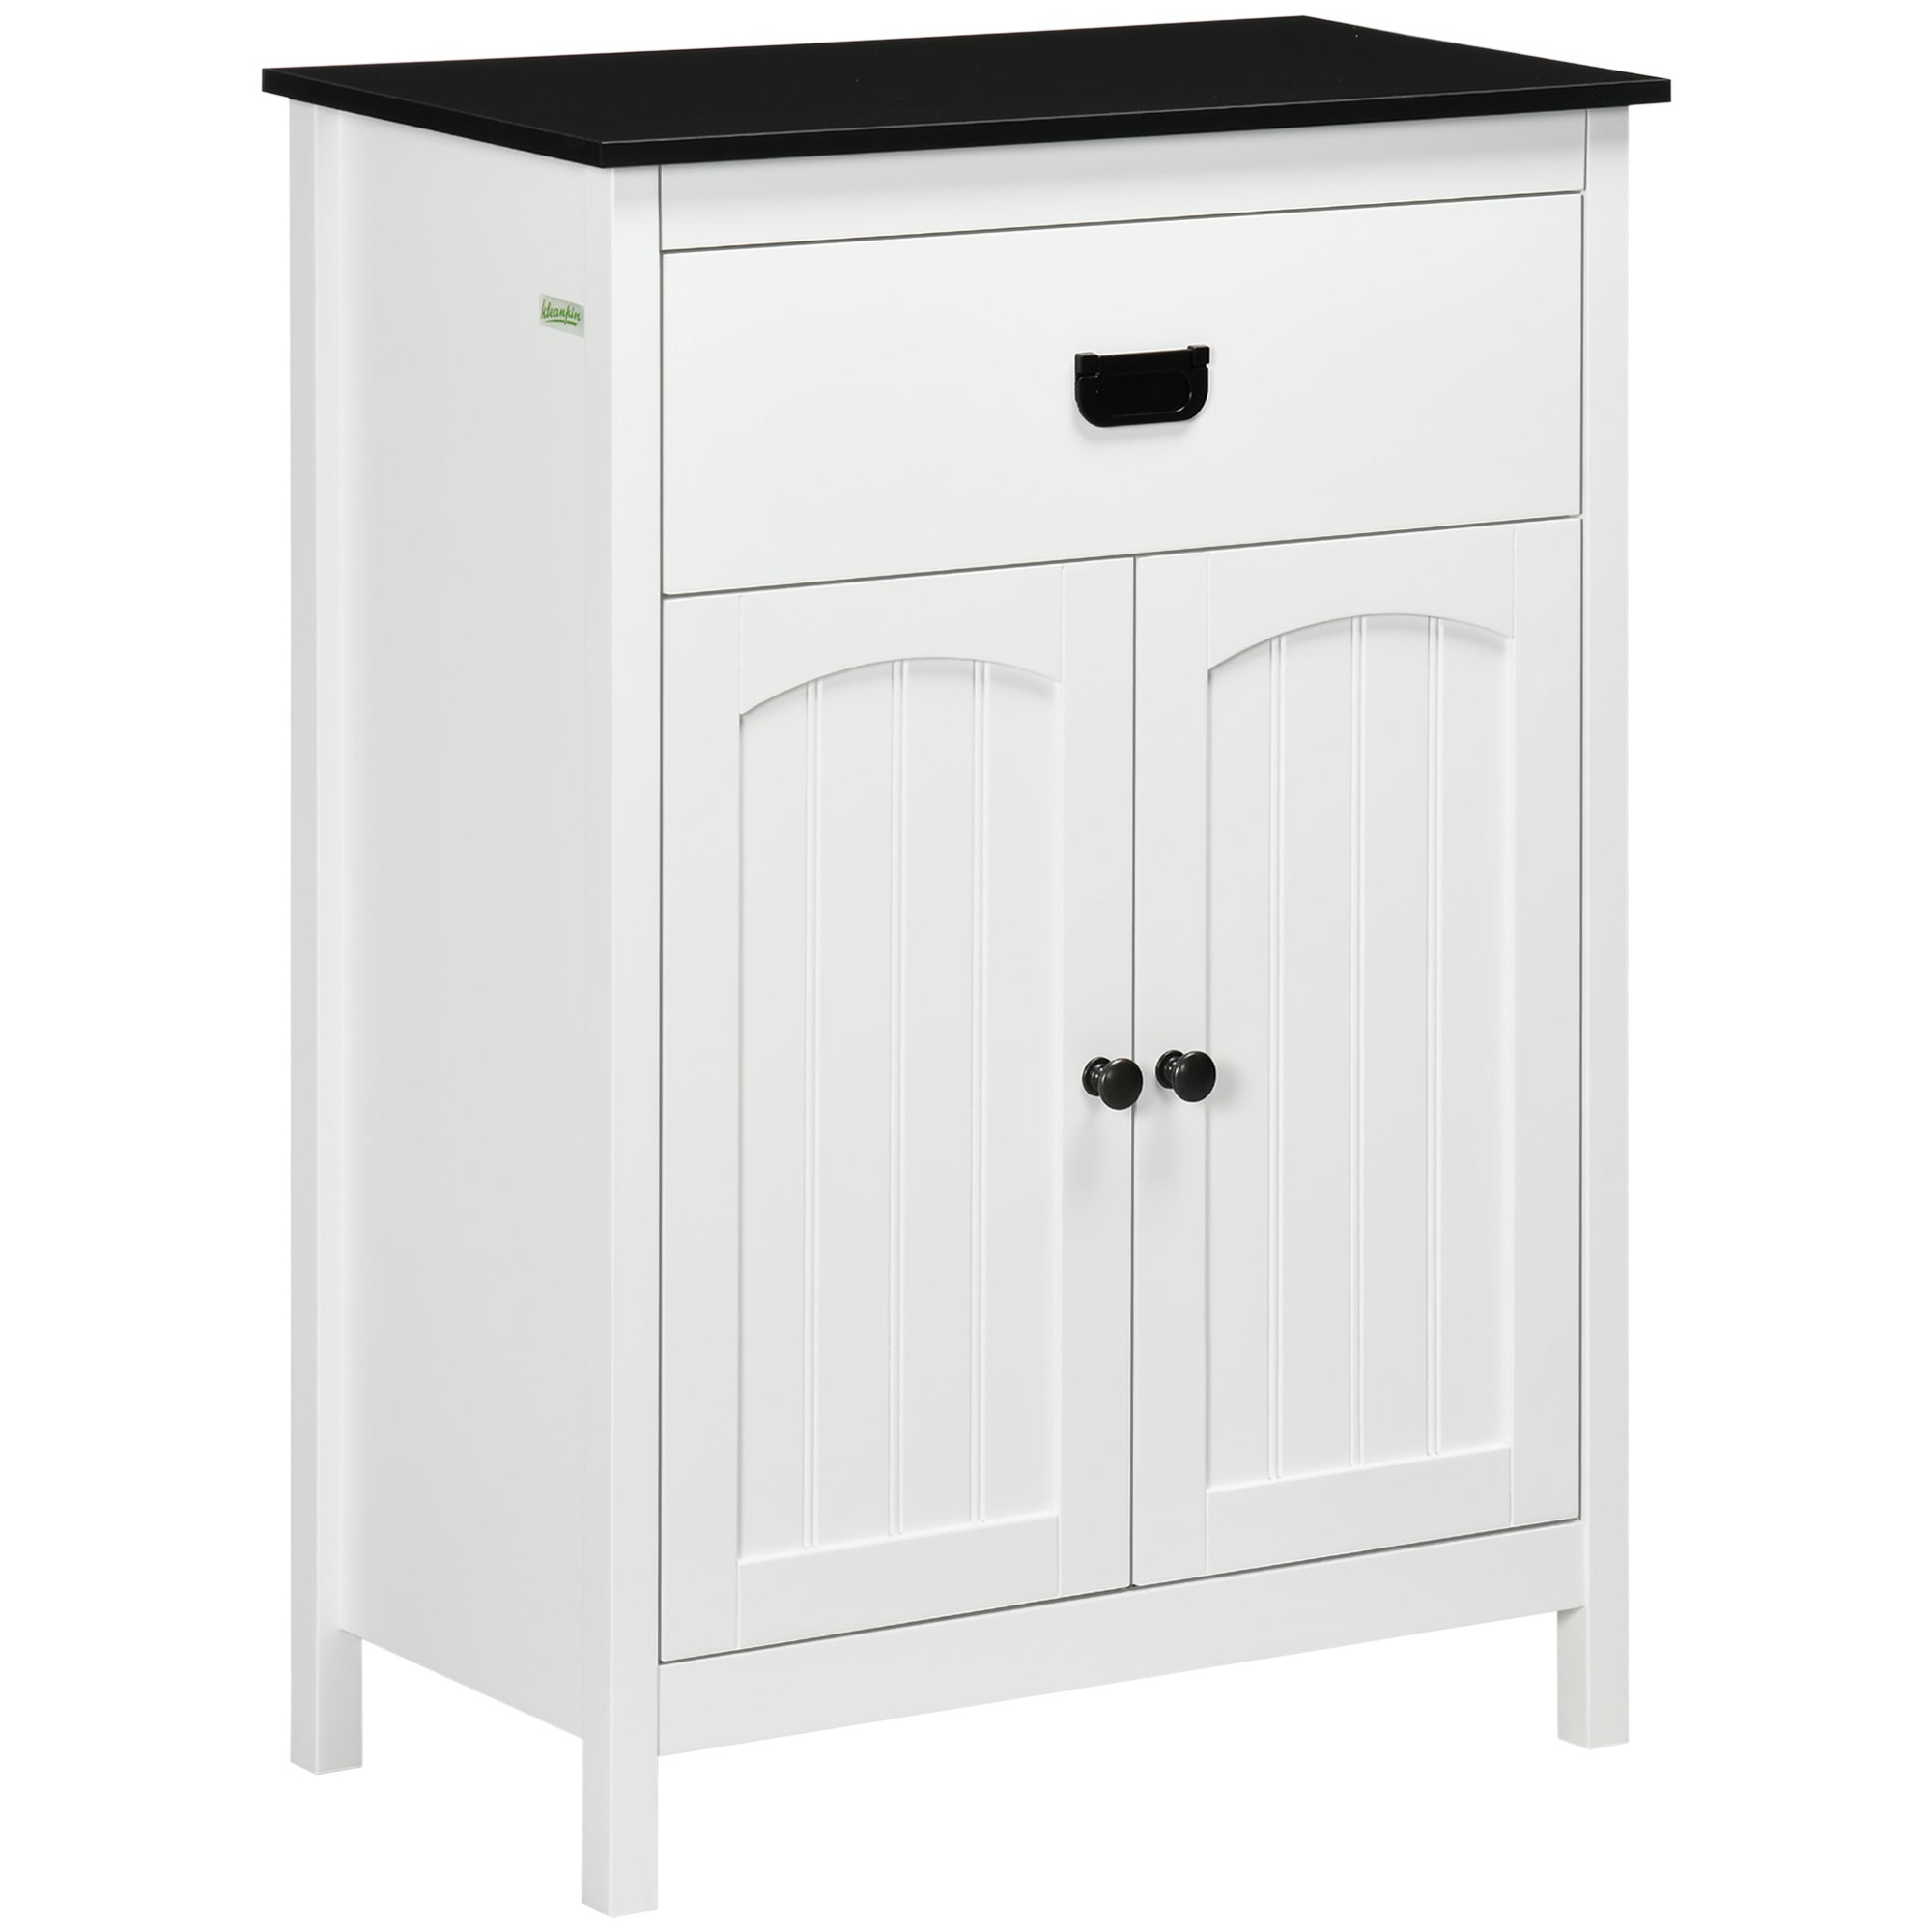 Bathroom Cabinet, Bathroom Storage Unit with Drawer, Double Door Cabinet, Adjustable Shelf for Living Room, White-0